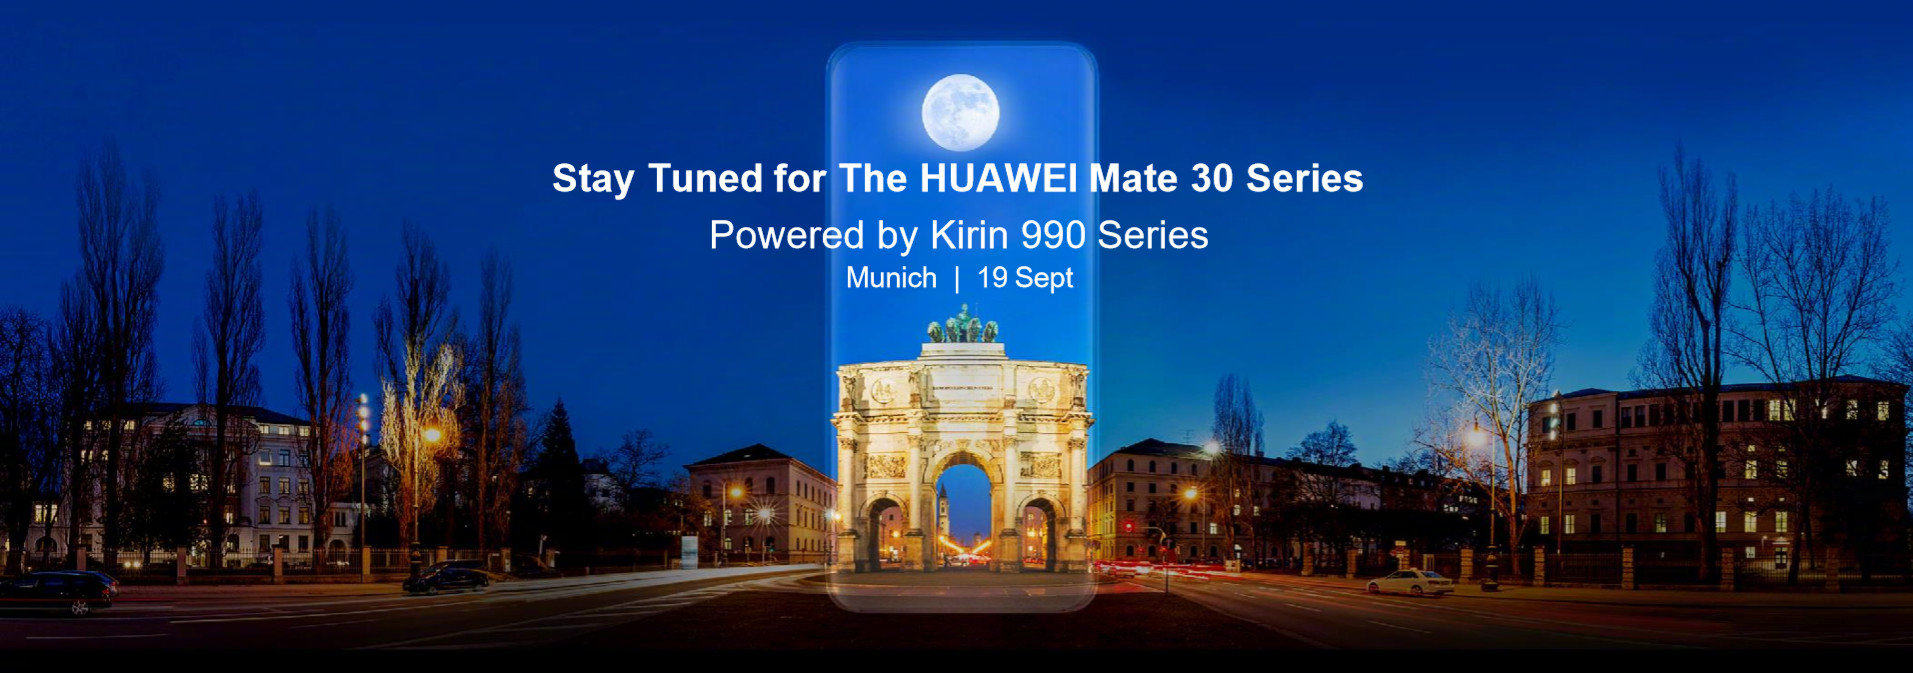 huawei mate 30 series launch banner 1